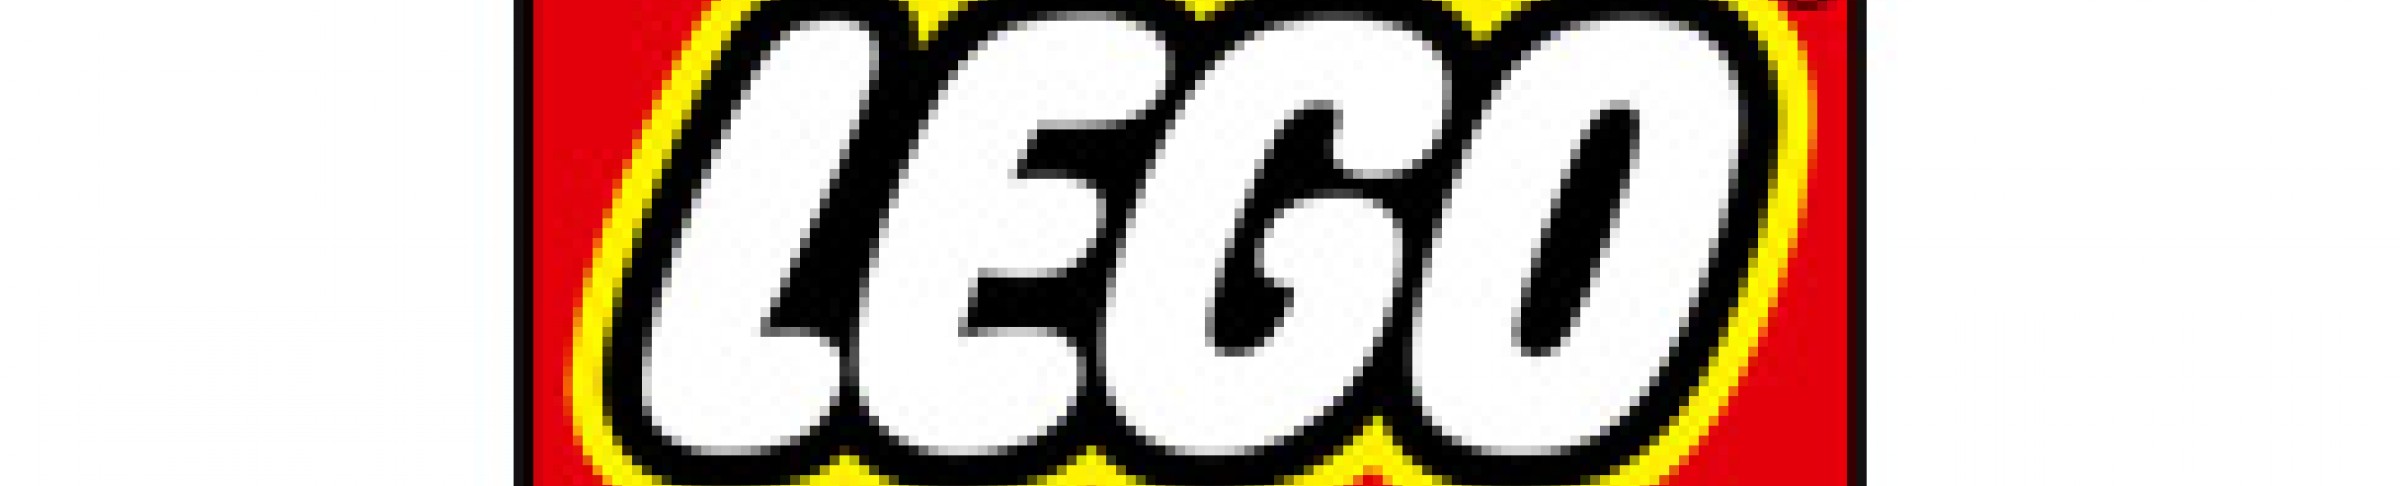 логотип лего картинки